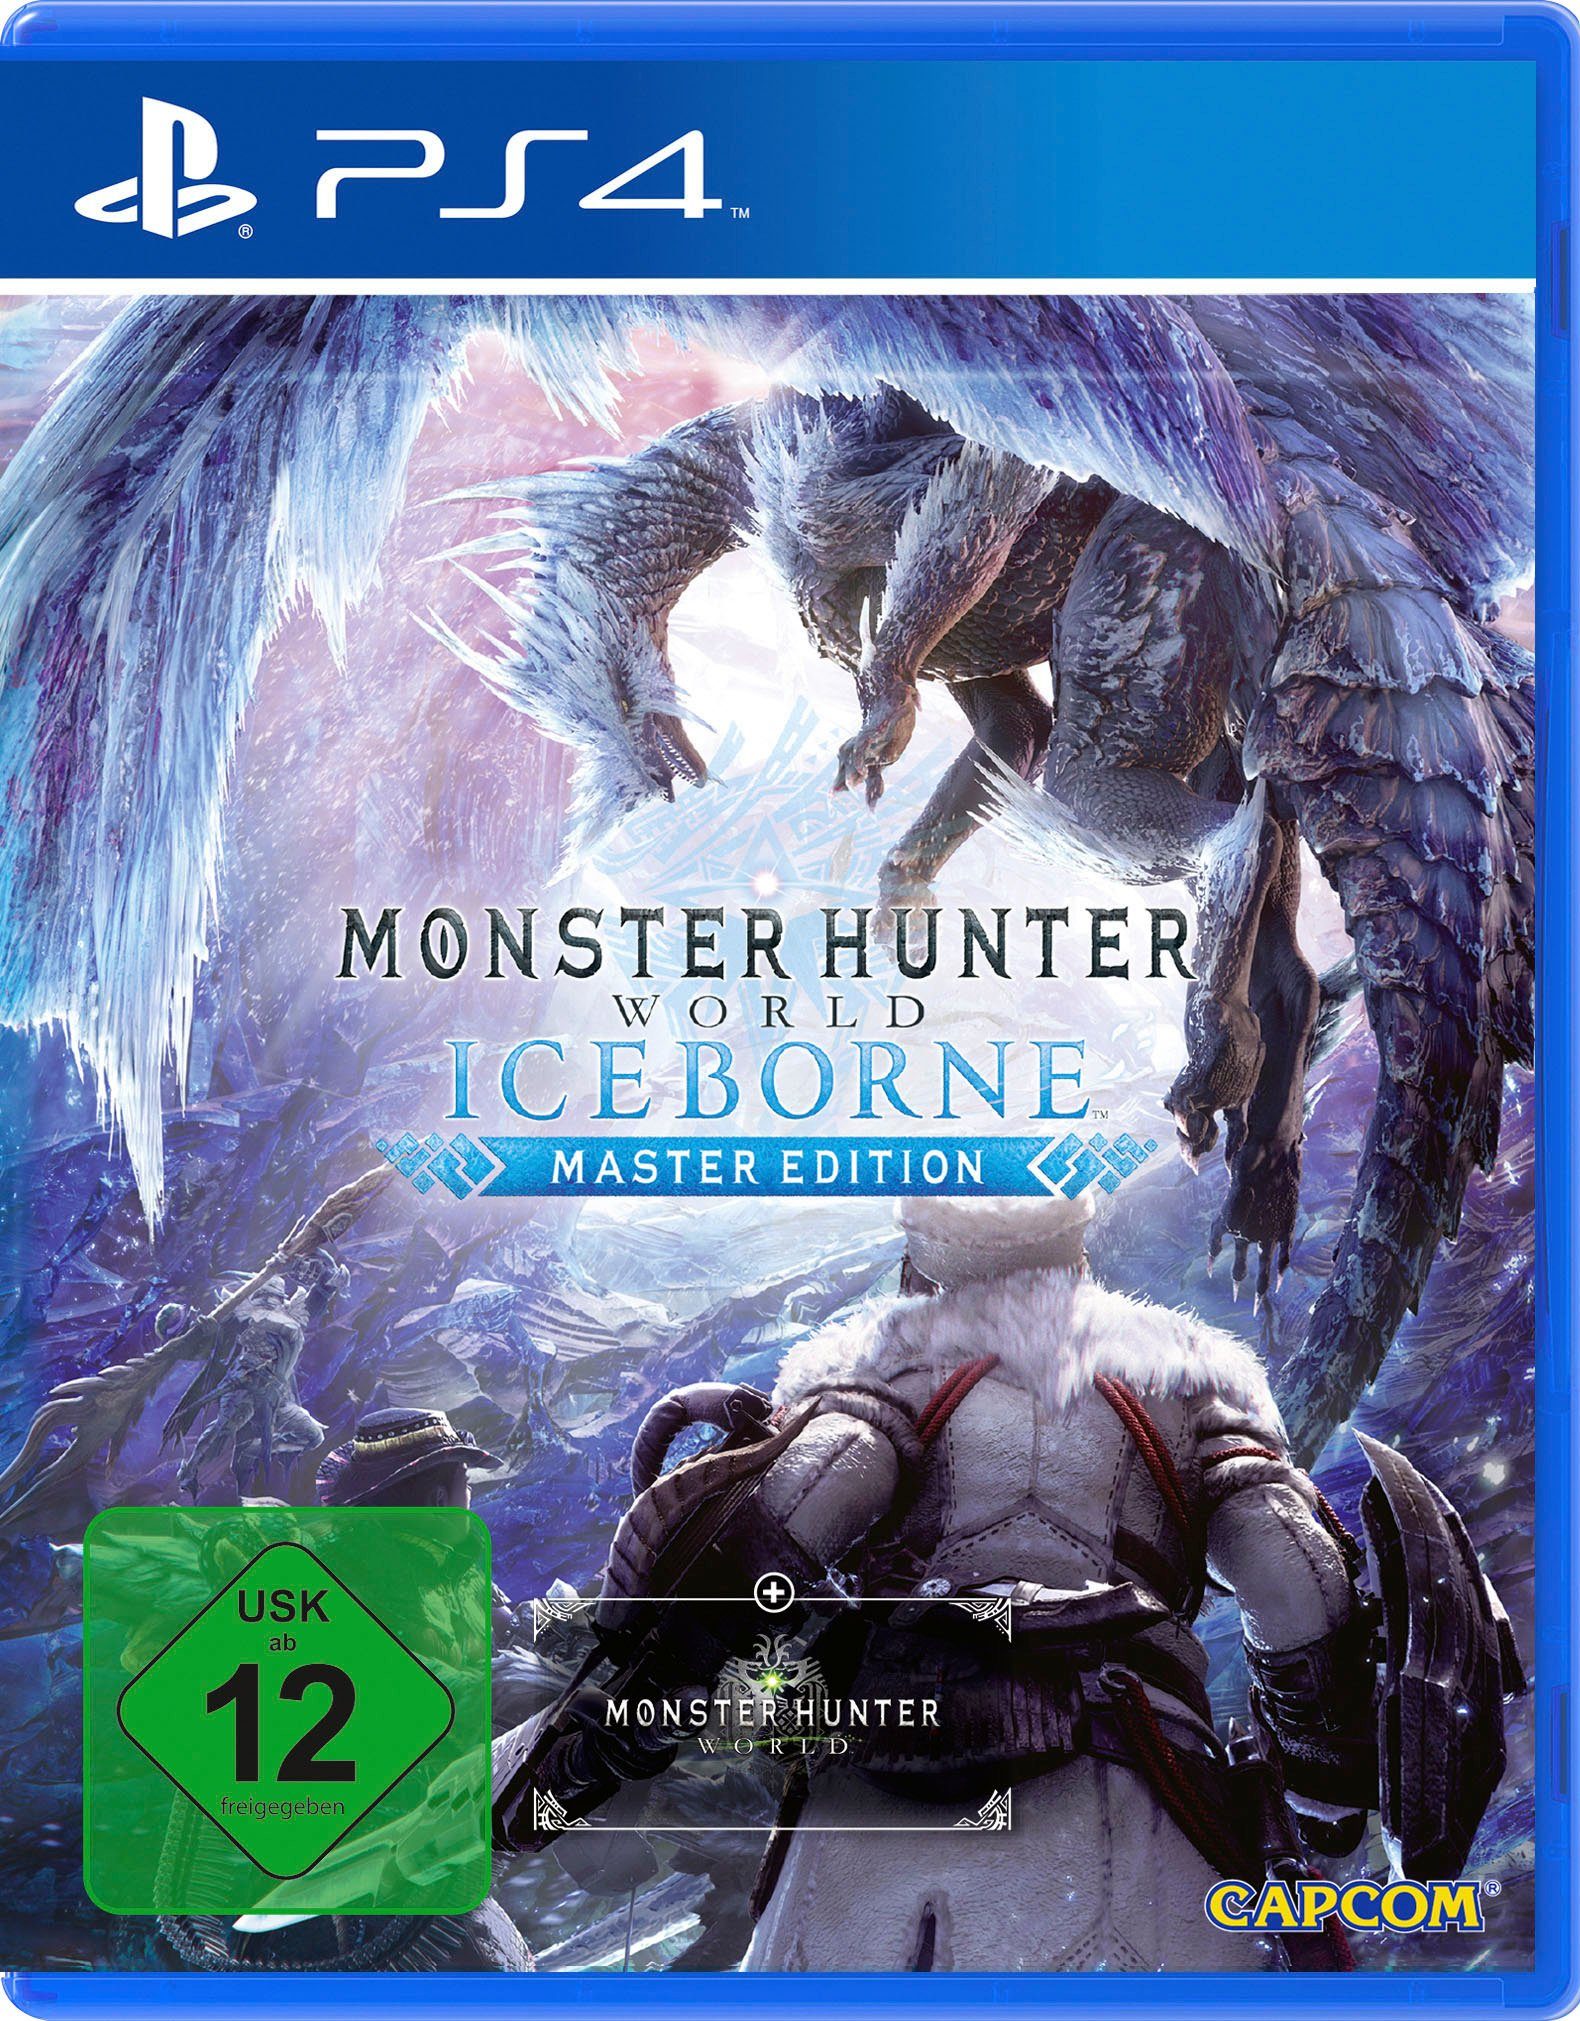 Hunter 4 Iceborne World: Monster Capcom PlayStation